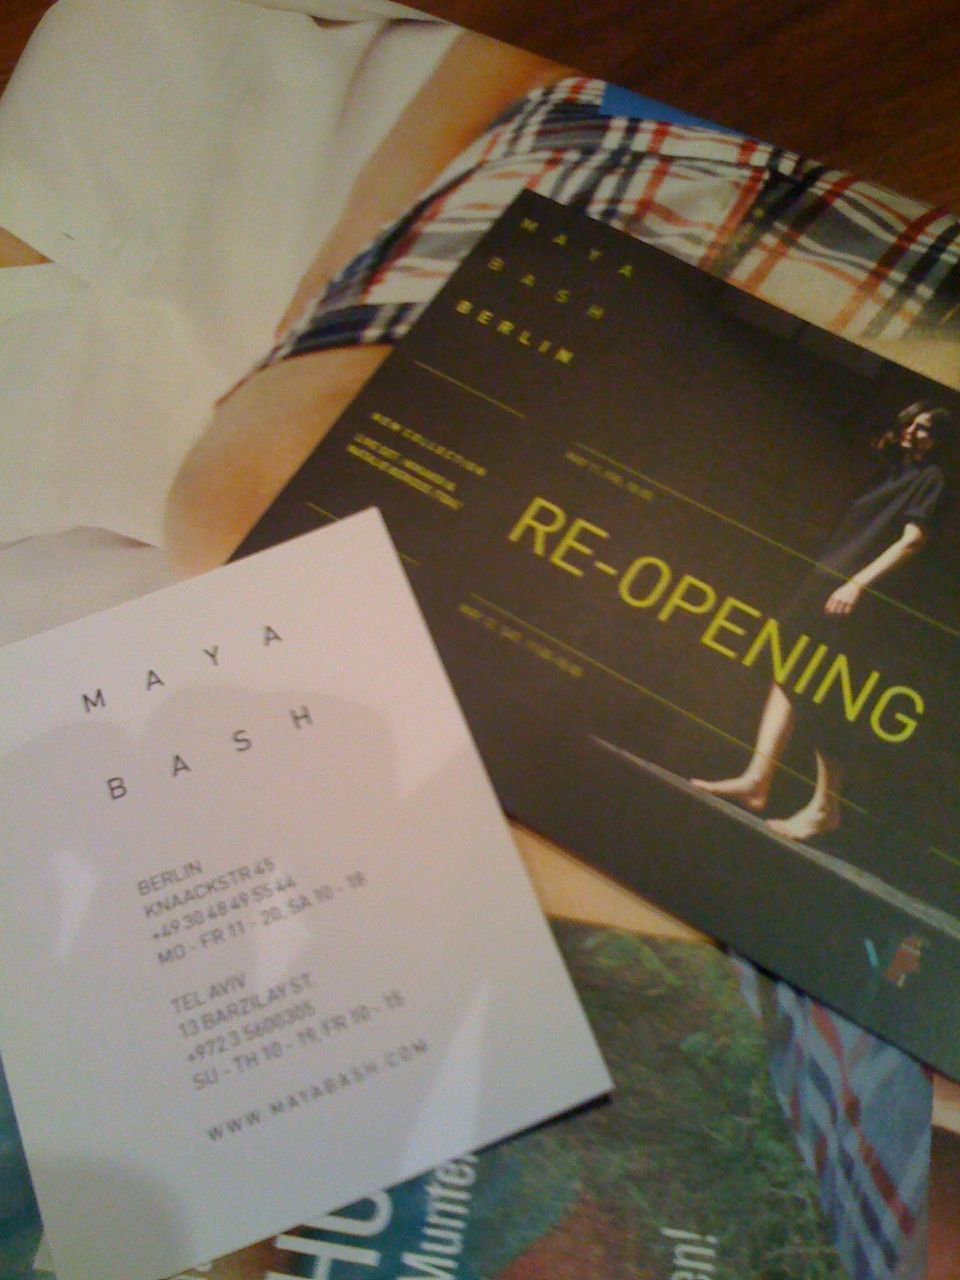 <!--:en-->Israeli Designer !!i Maya Bash Shop opening in Berlin<!--:-->